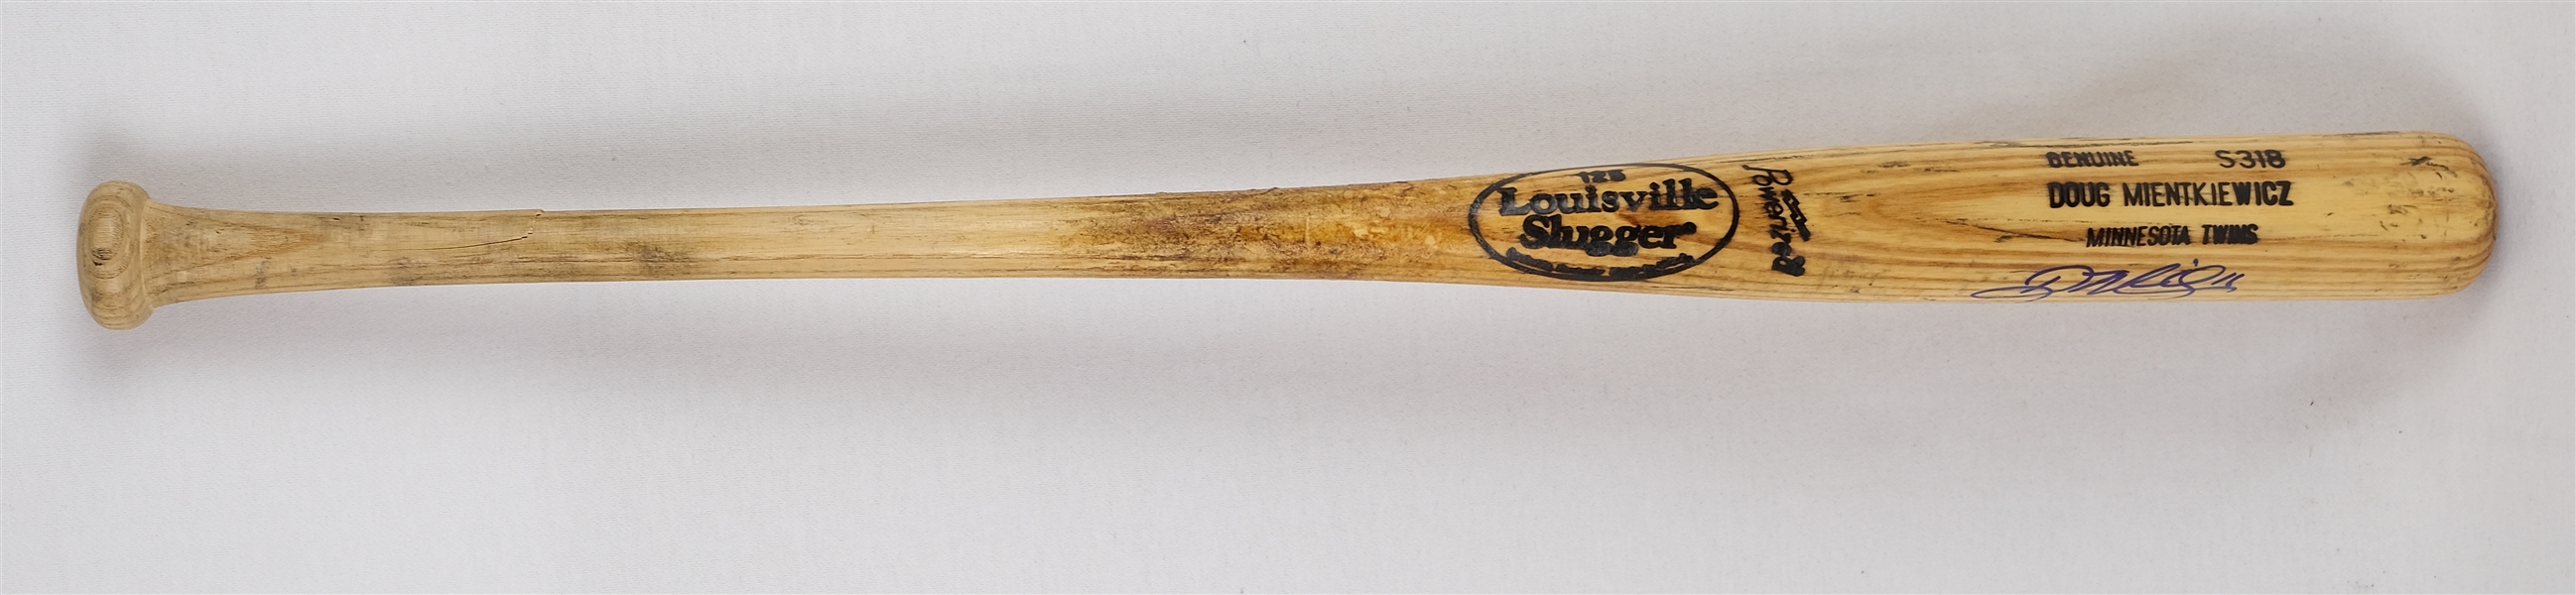 Doug Mientkiewicz Minnesota Twins Game Used & Autographed Bat